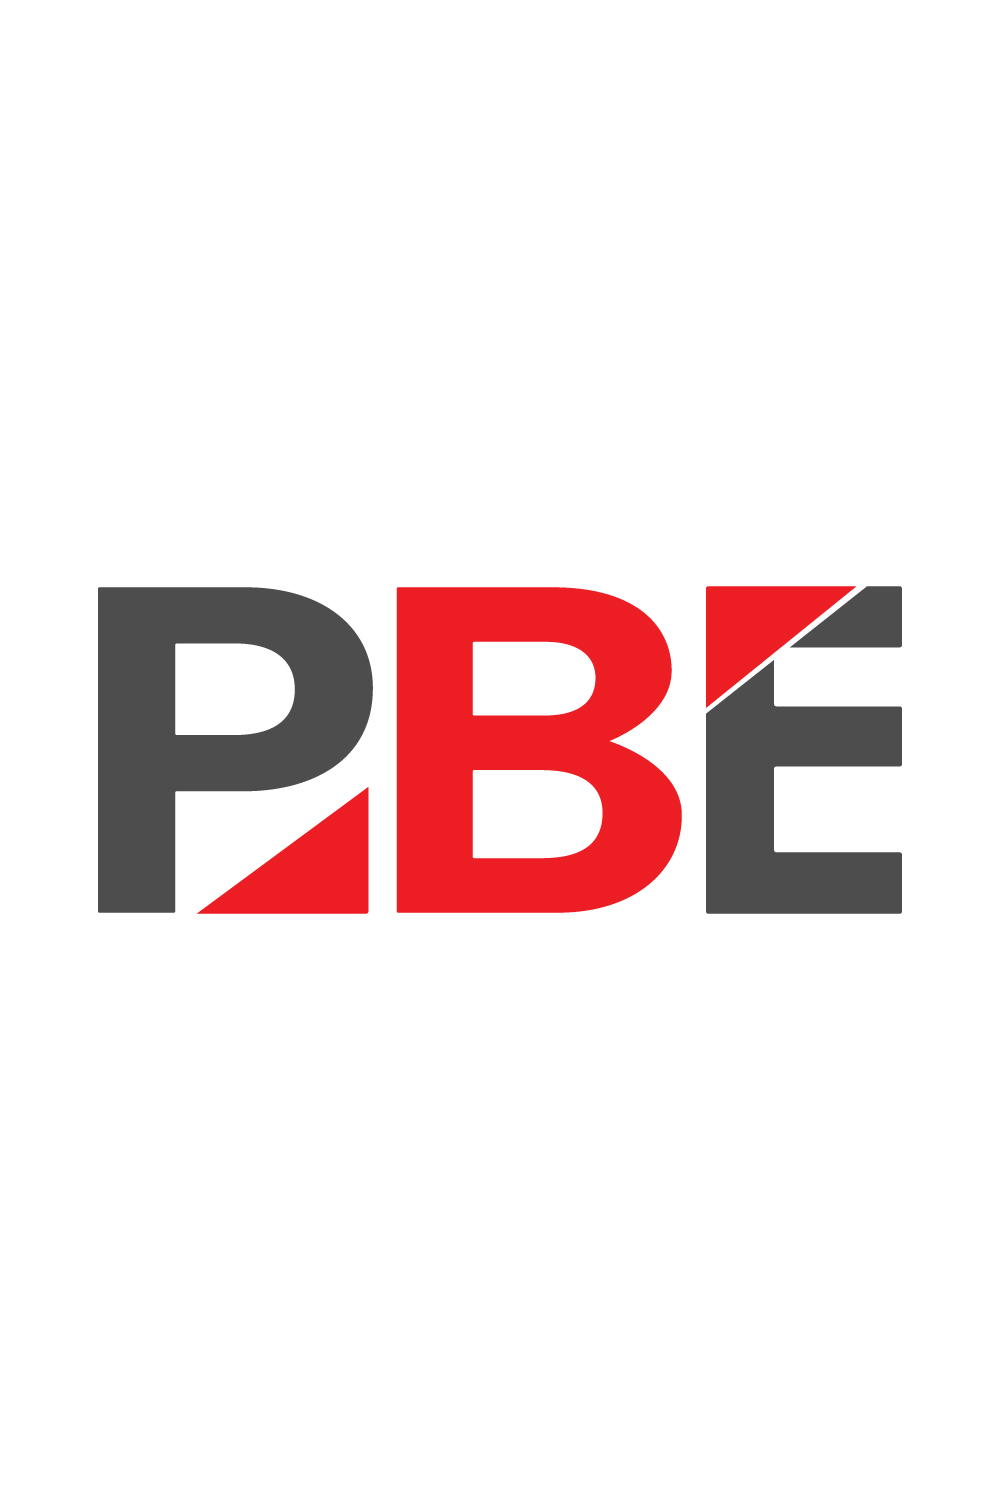 Professional PBE letters logo design vector images PBE logo design template design, Premium, vector, illustration pinterest preview image.